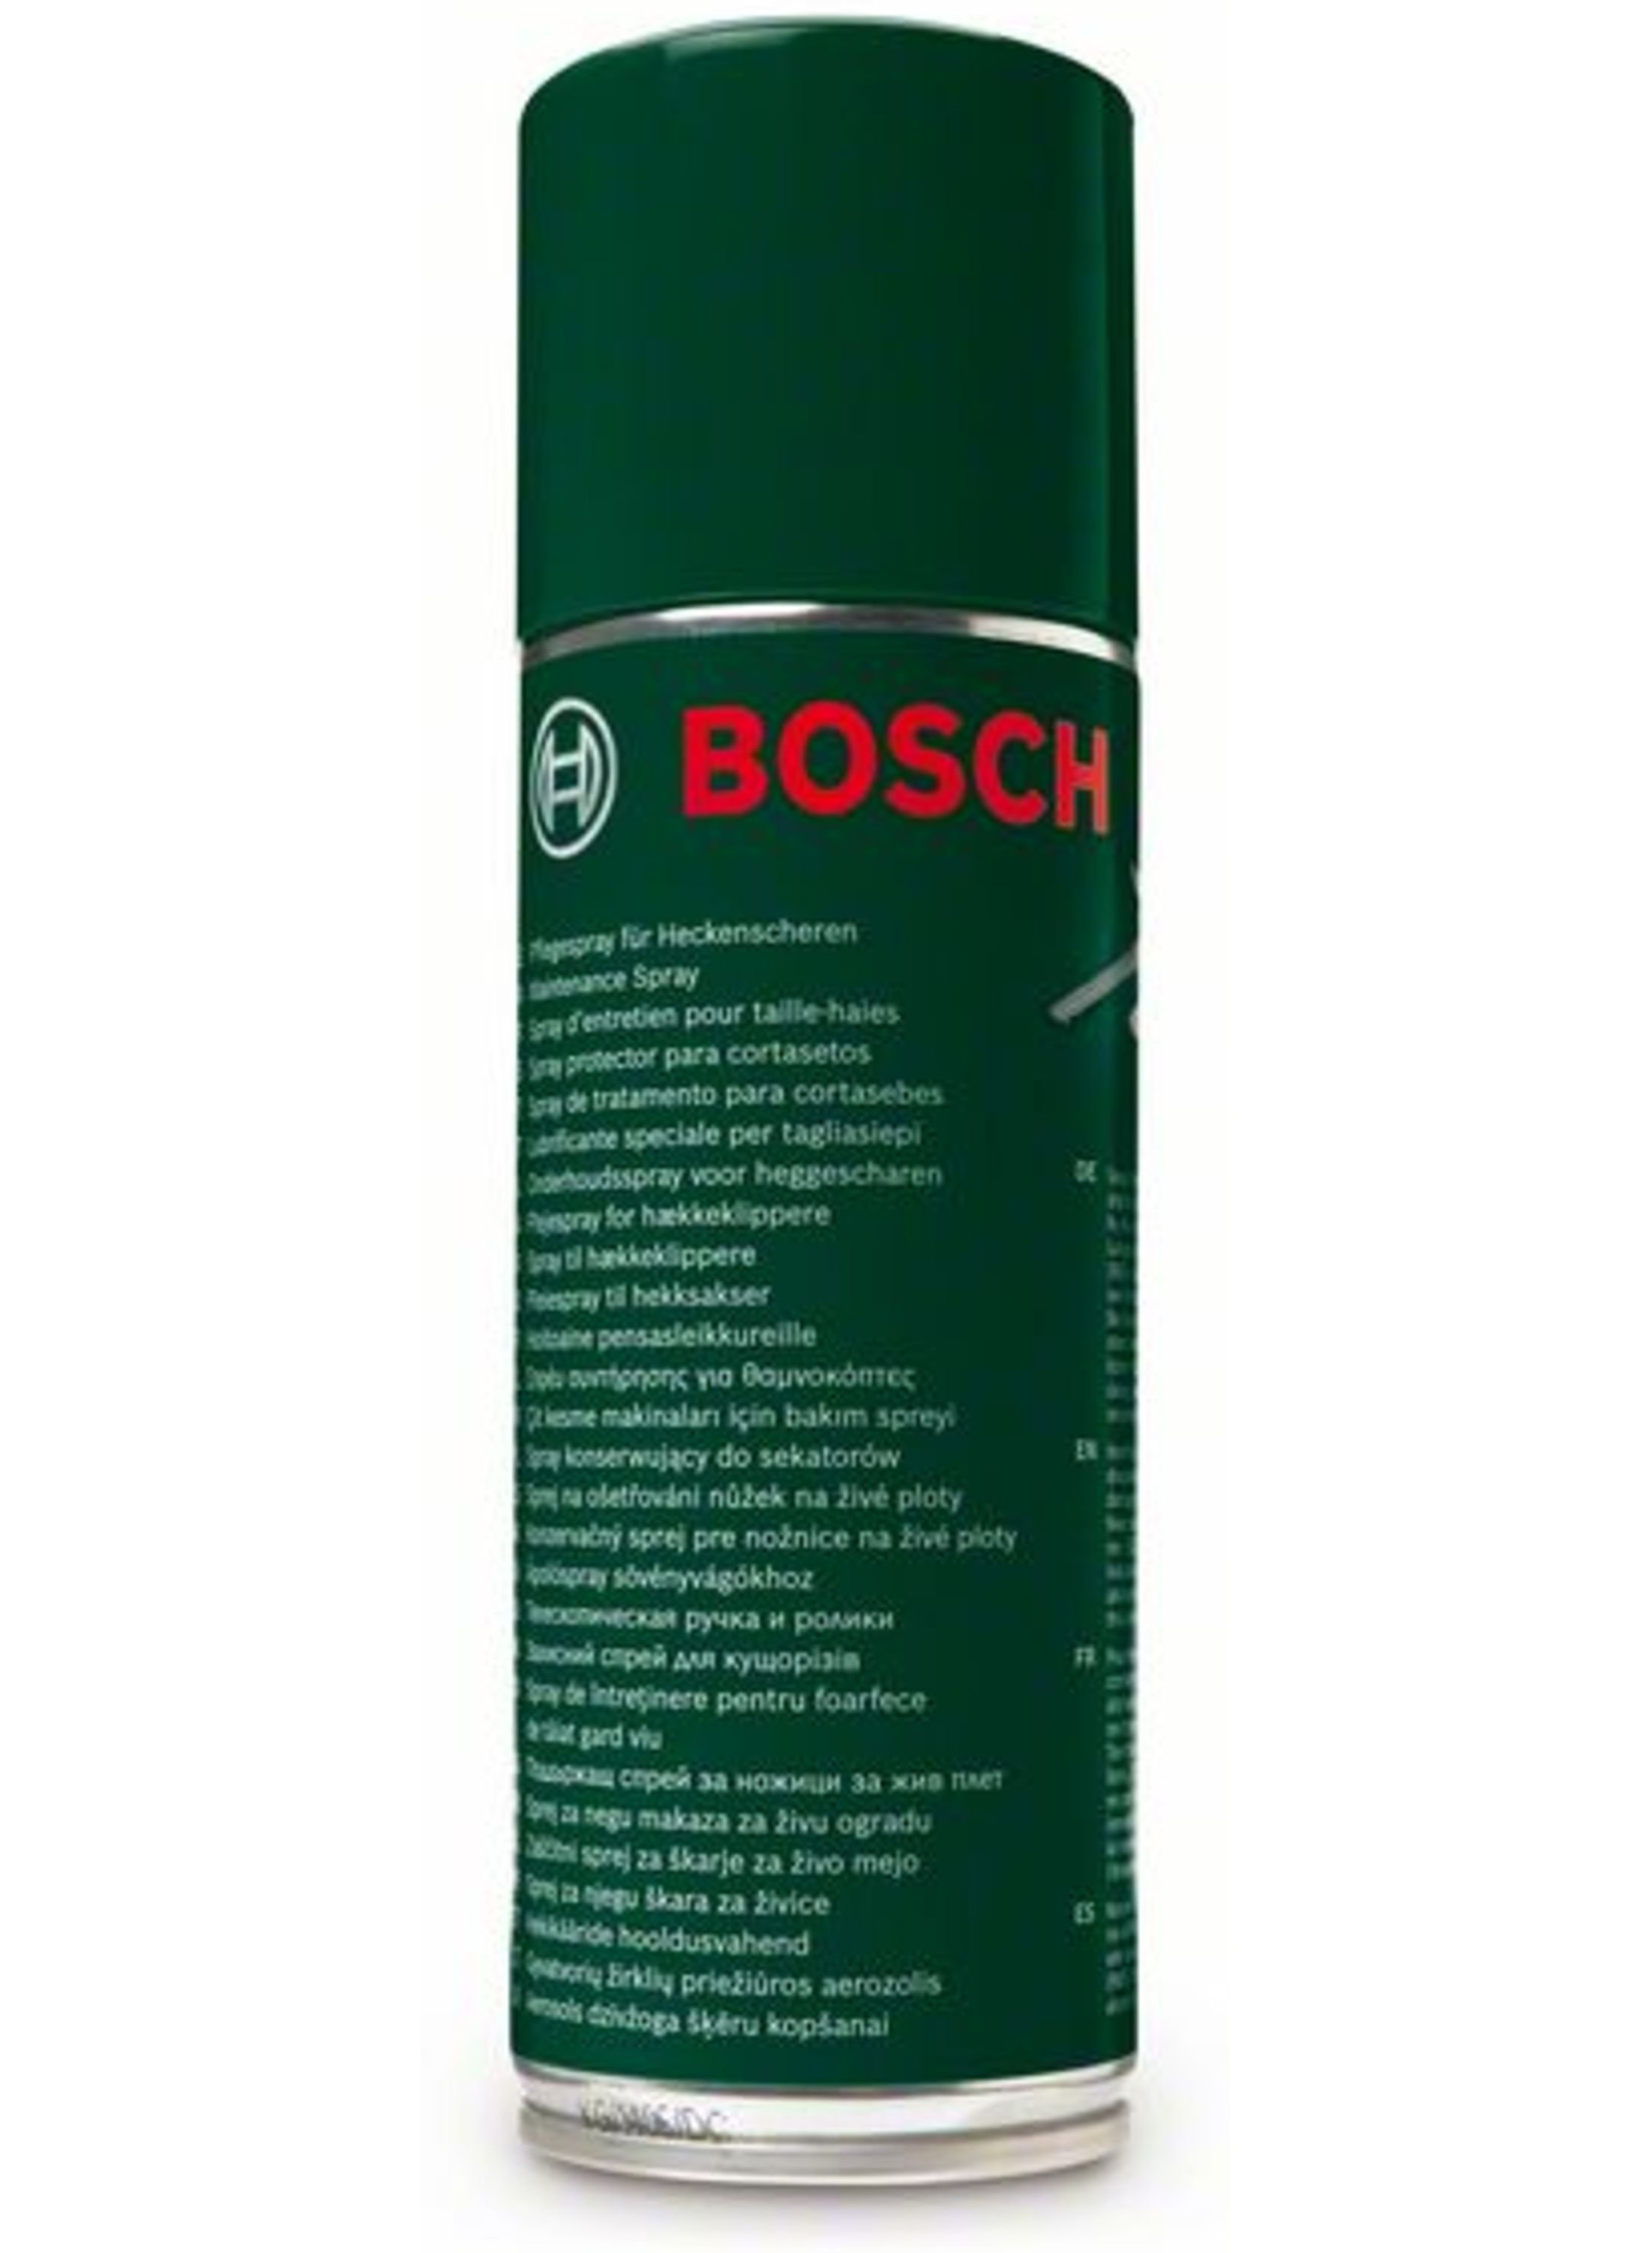 Bosch Rustproof spray lubricant for all models